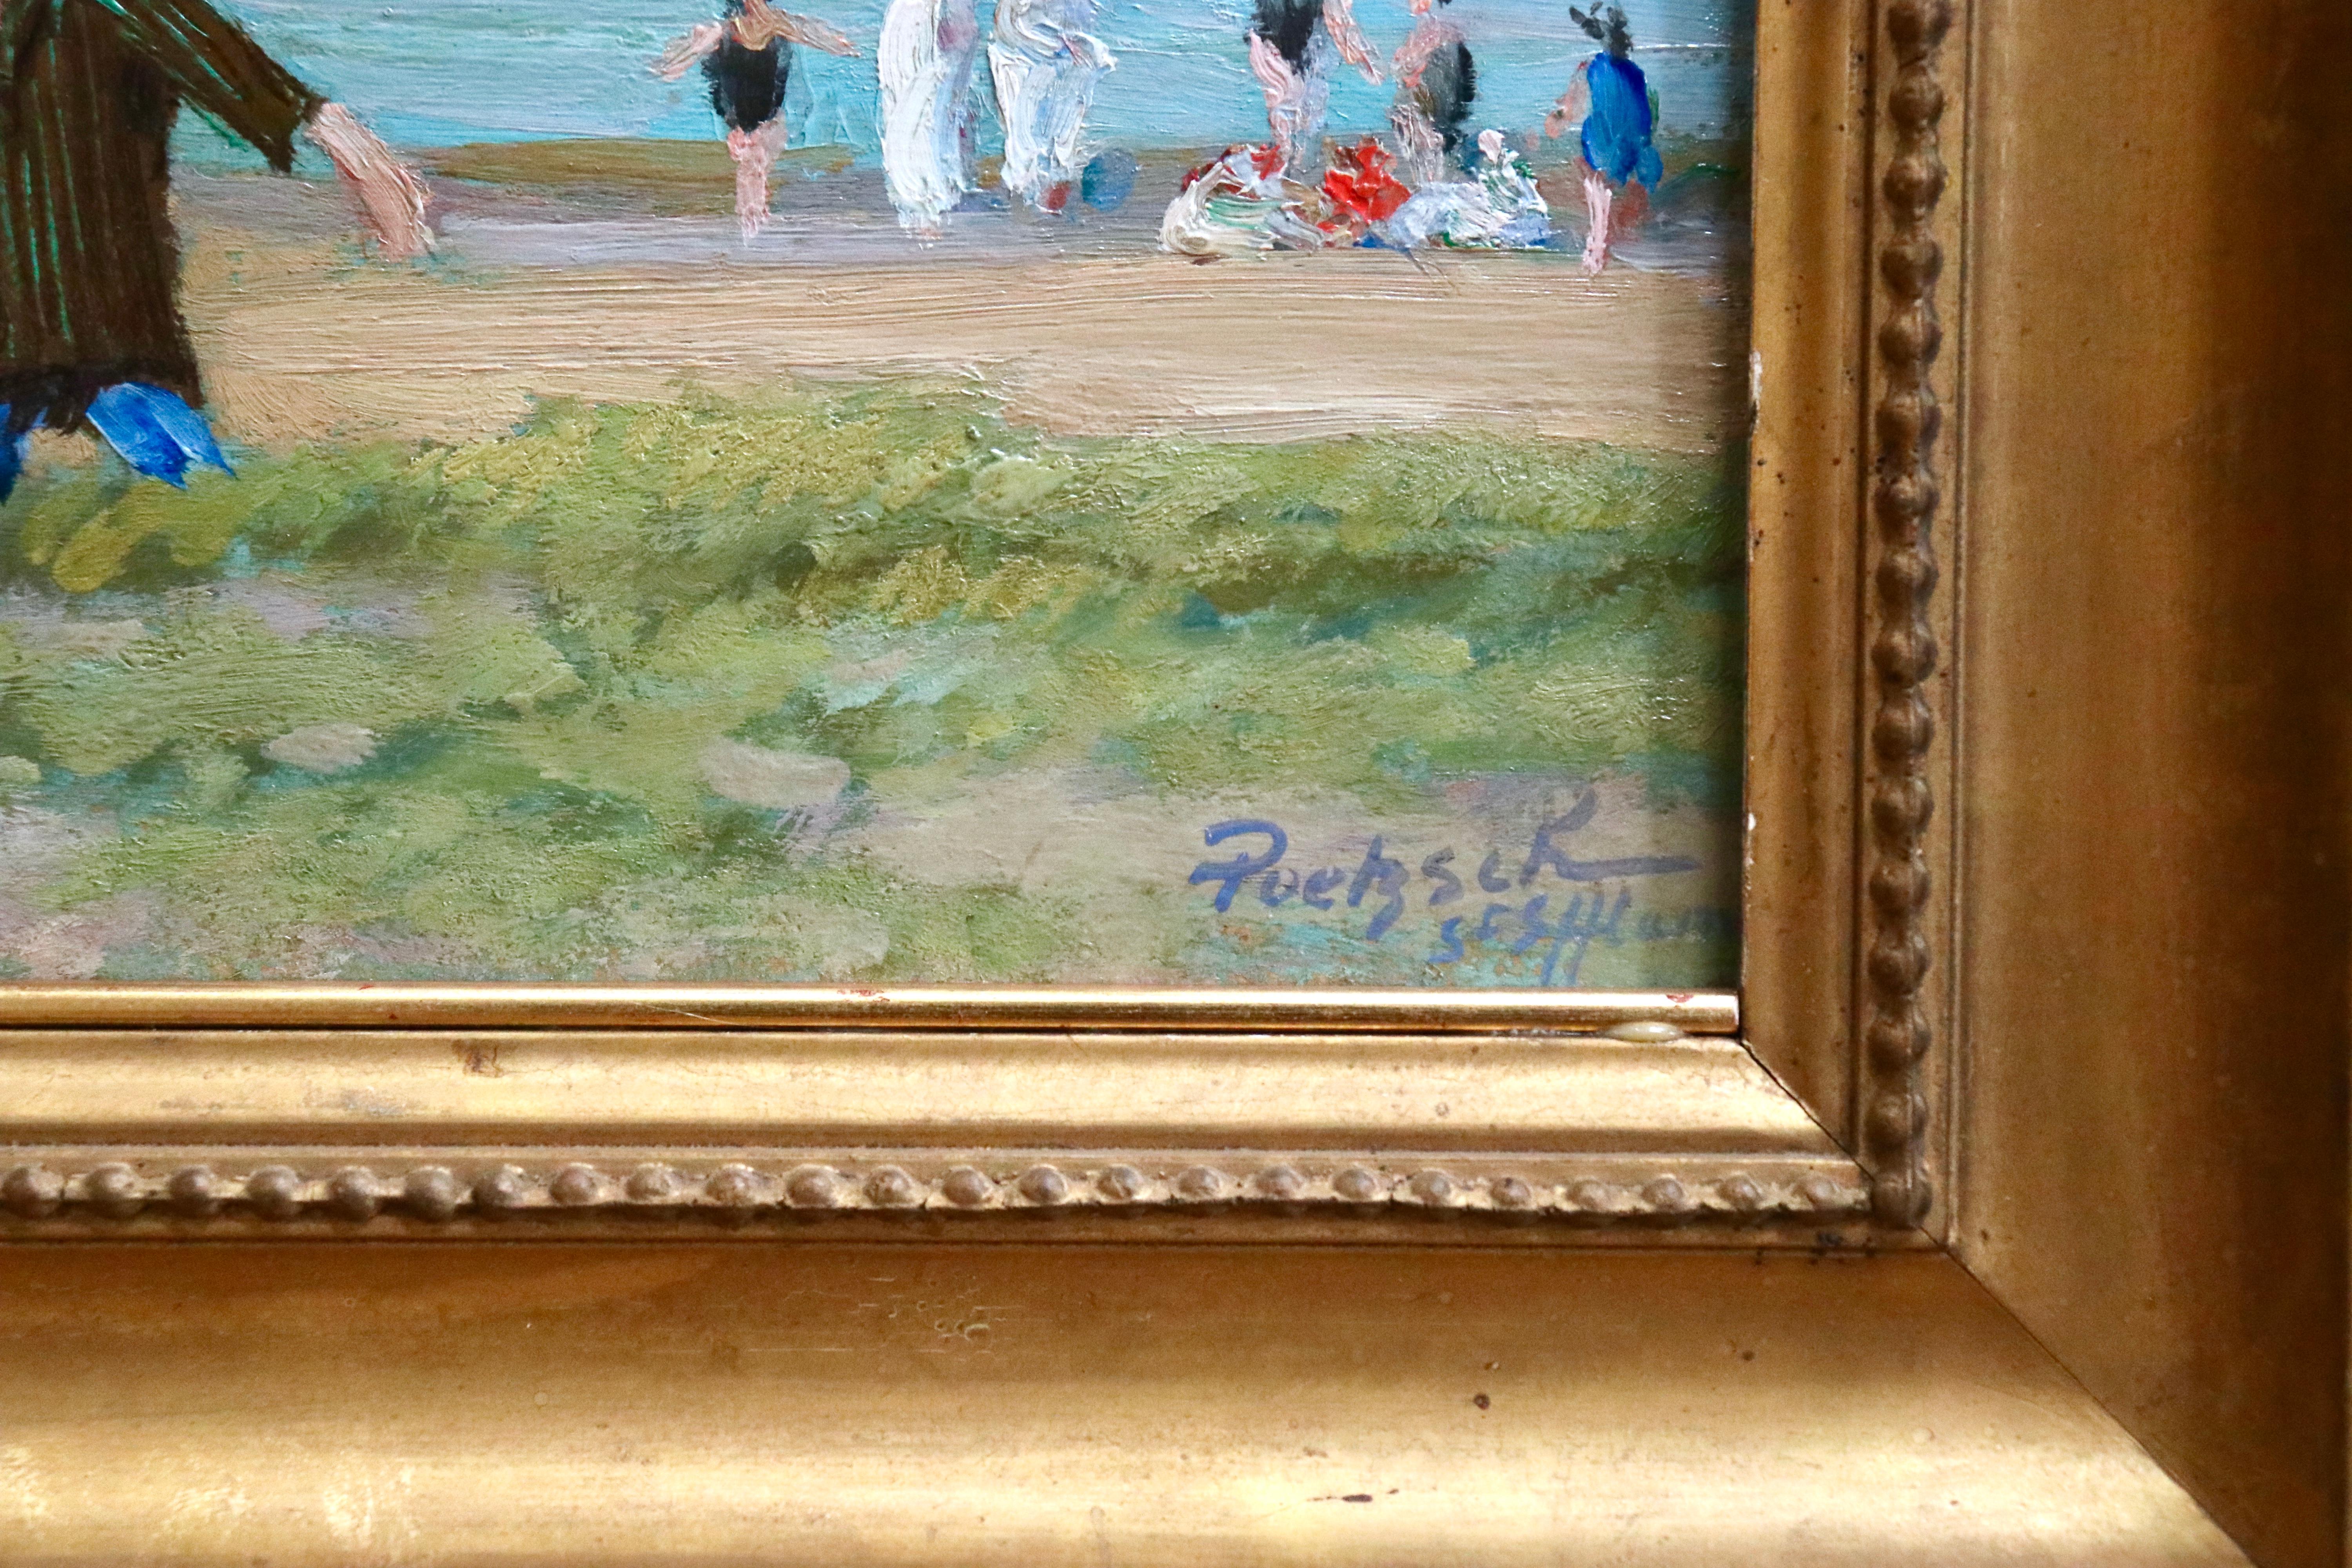 Saint Efflam Elegant Figures on the Beach - 19th Century Landscape - G Poetzsch - Post-Impressionist Painting by Gustave Poetzsch